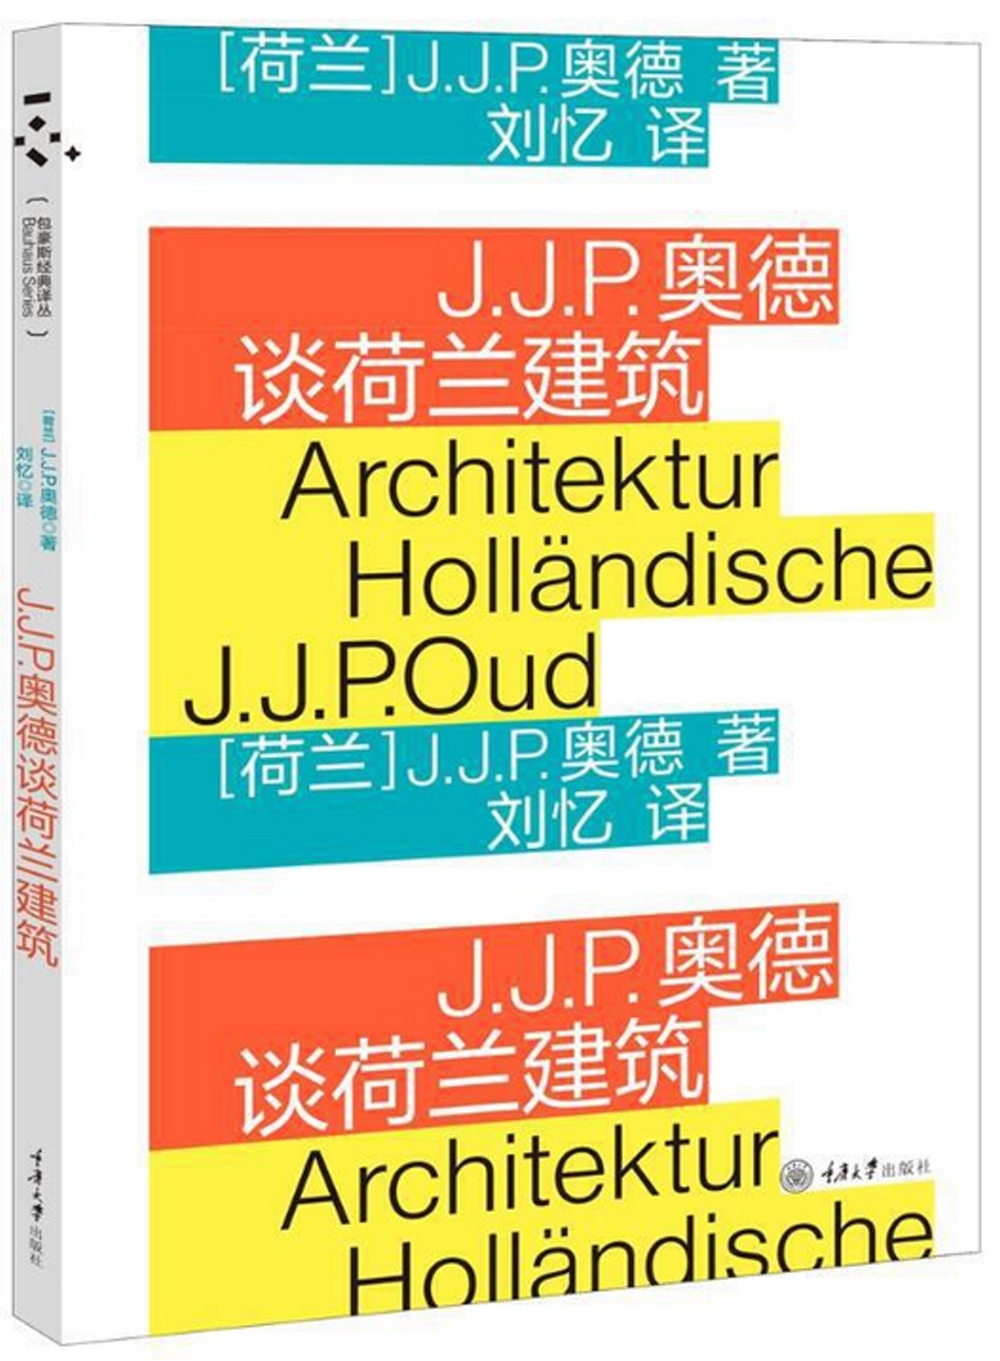 J.J.P.奧德談荷蘭建築